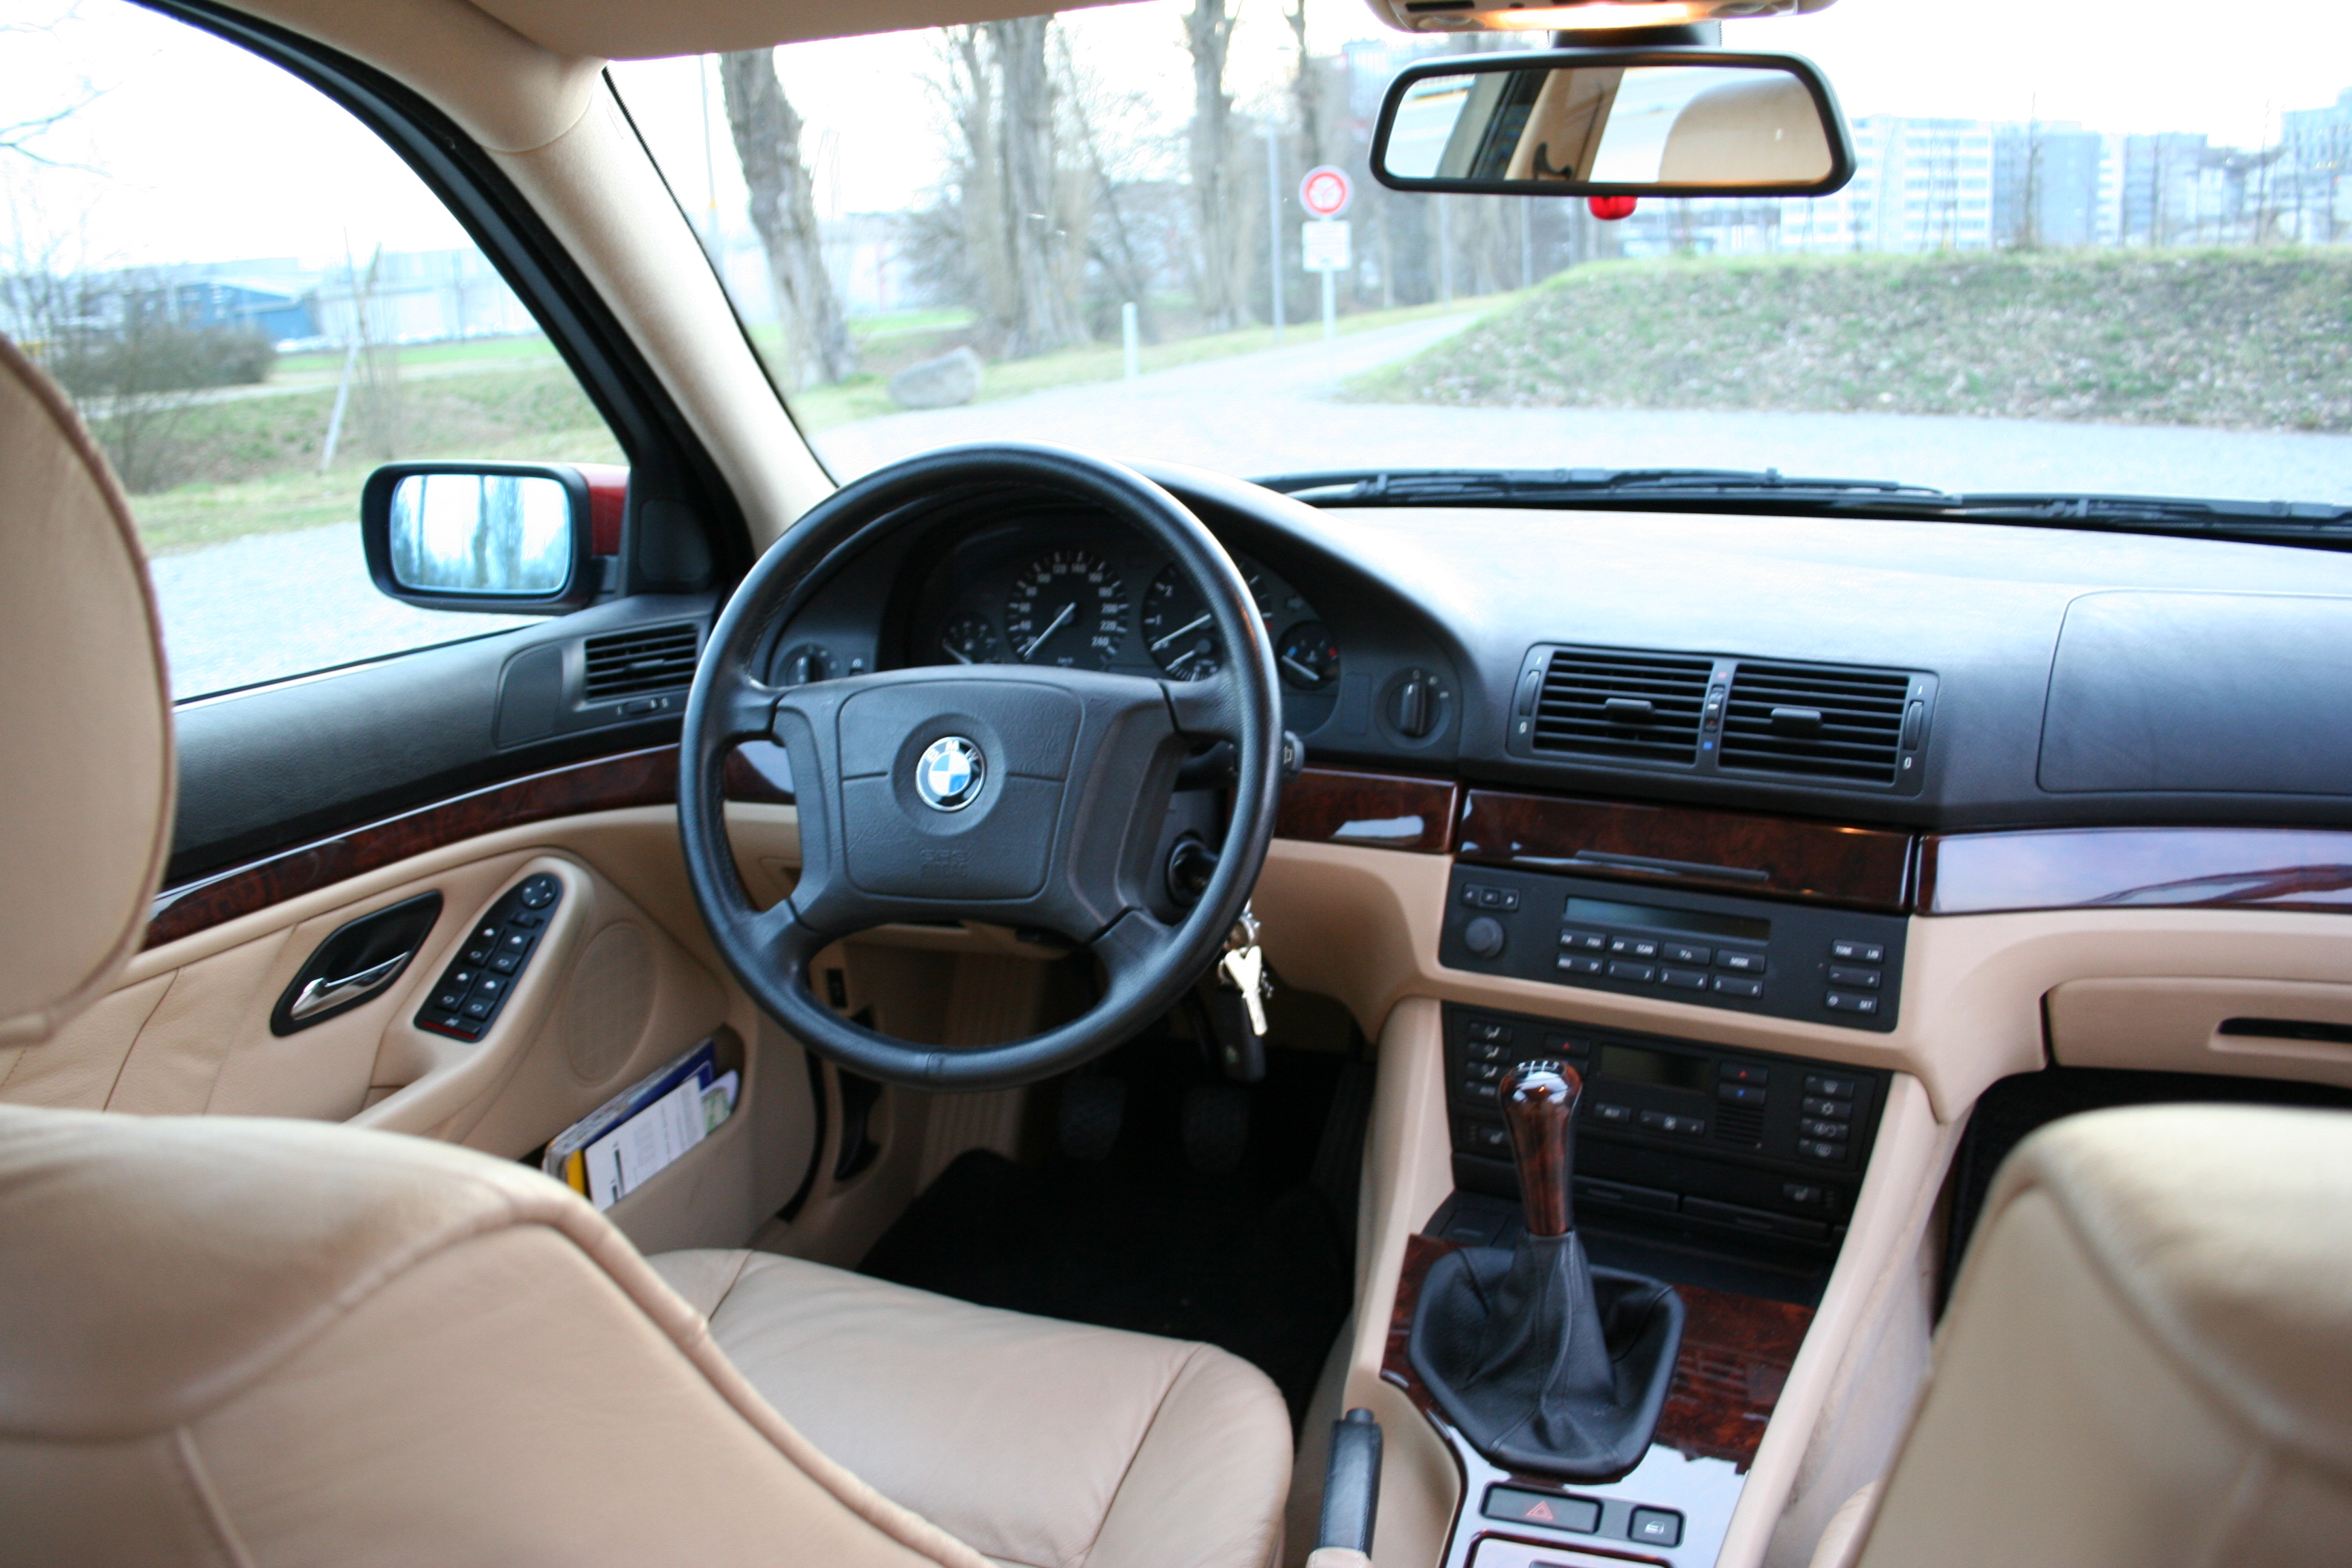 BMW 5-series E39